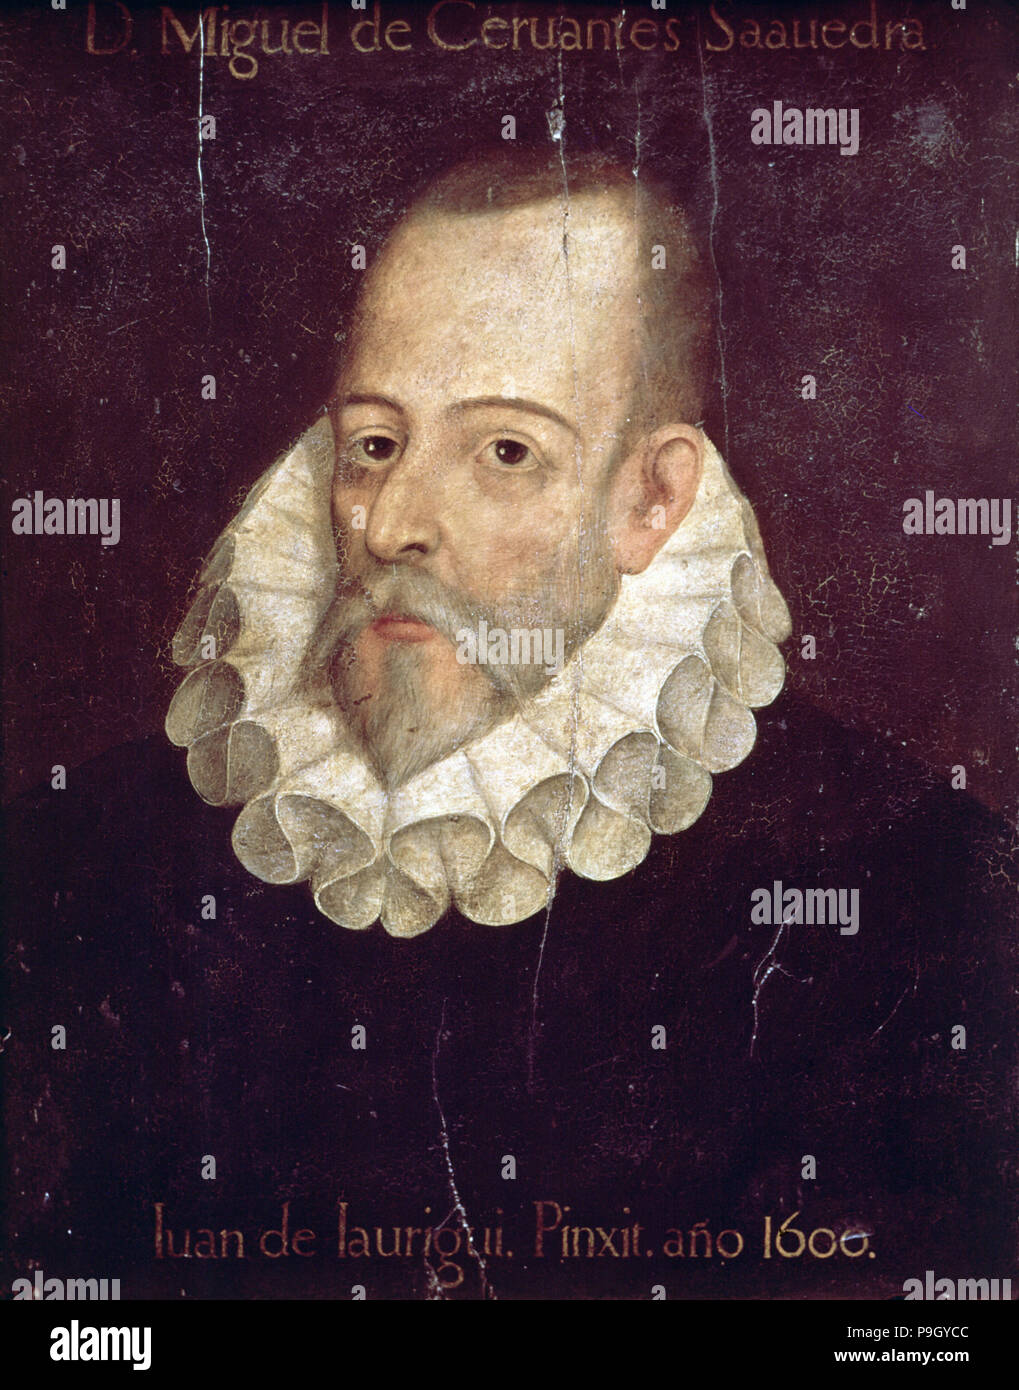 Miguel de Cervantes y Saavedra (1547-1615), écrivain espagnol. Banque D'Images